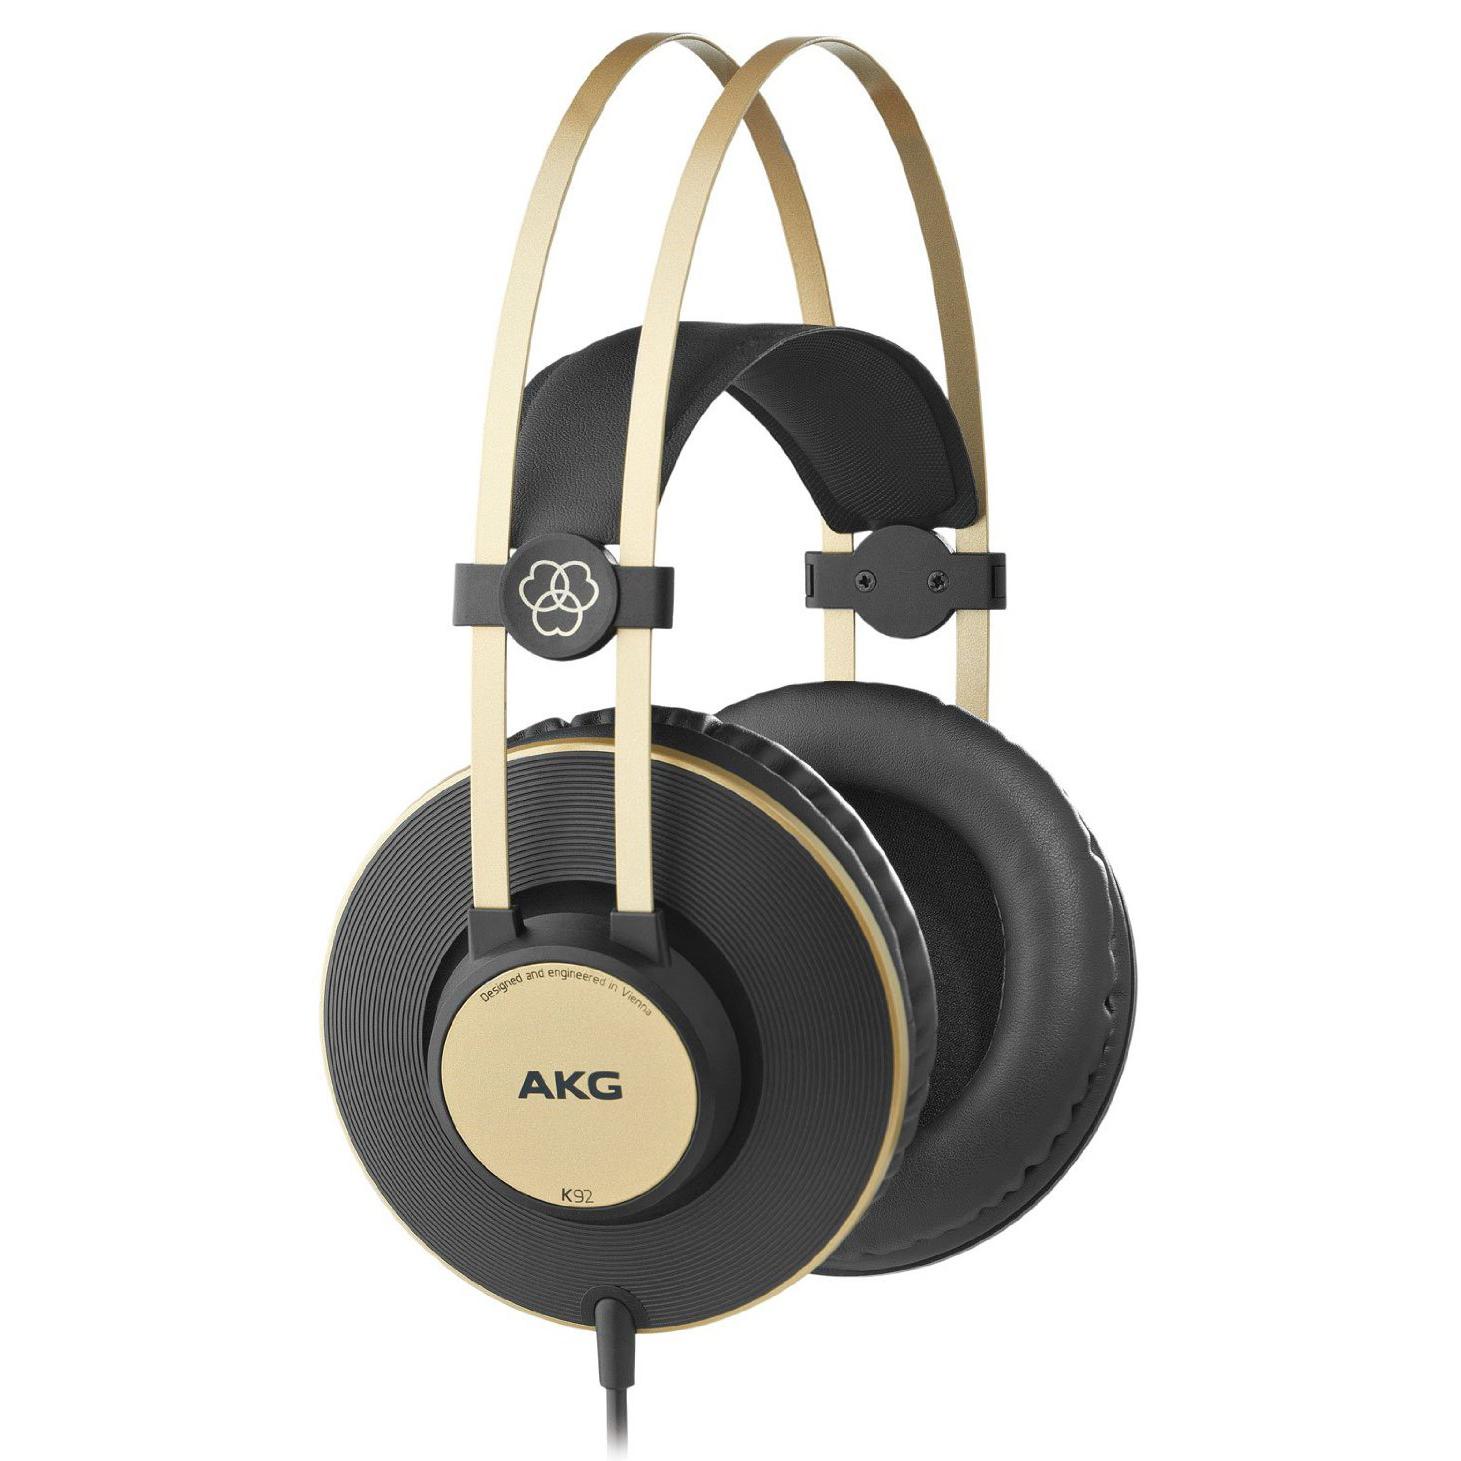 AKG 爱科技 K92 封闭罩耳式 耳机